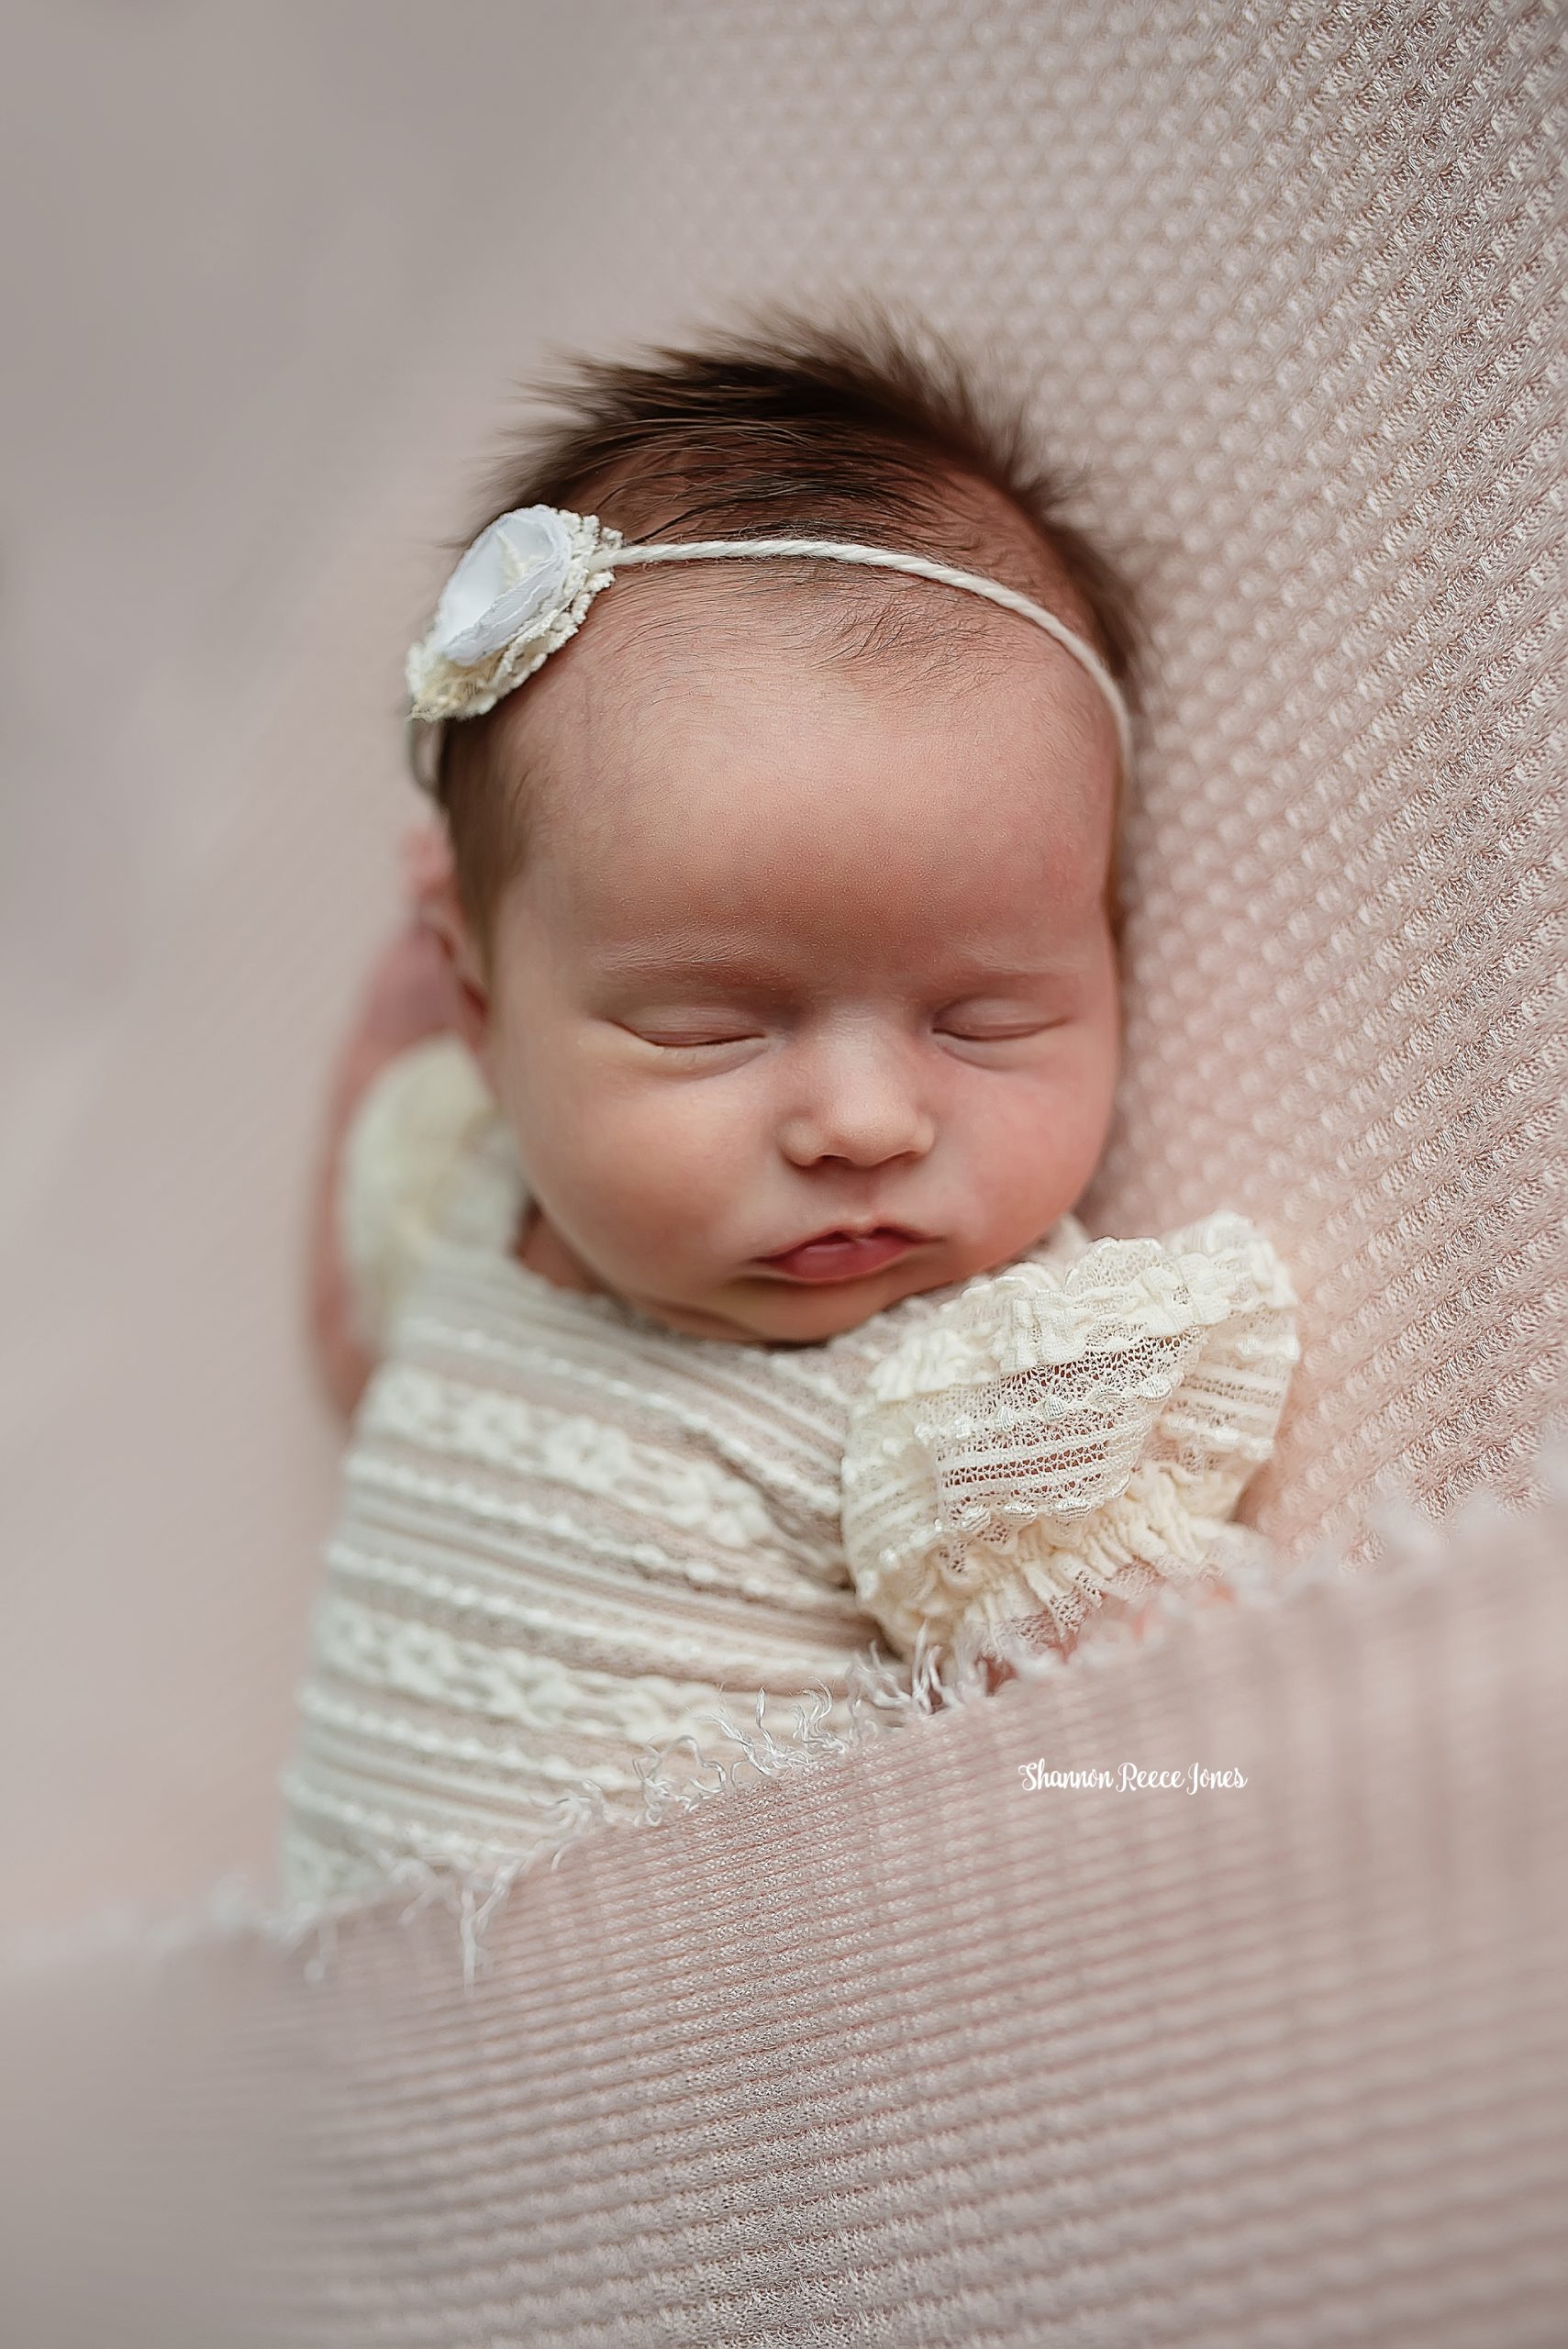 studio newborn photos, infant asleep on blankets in lacy dress